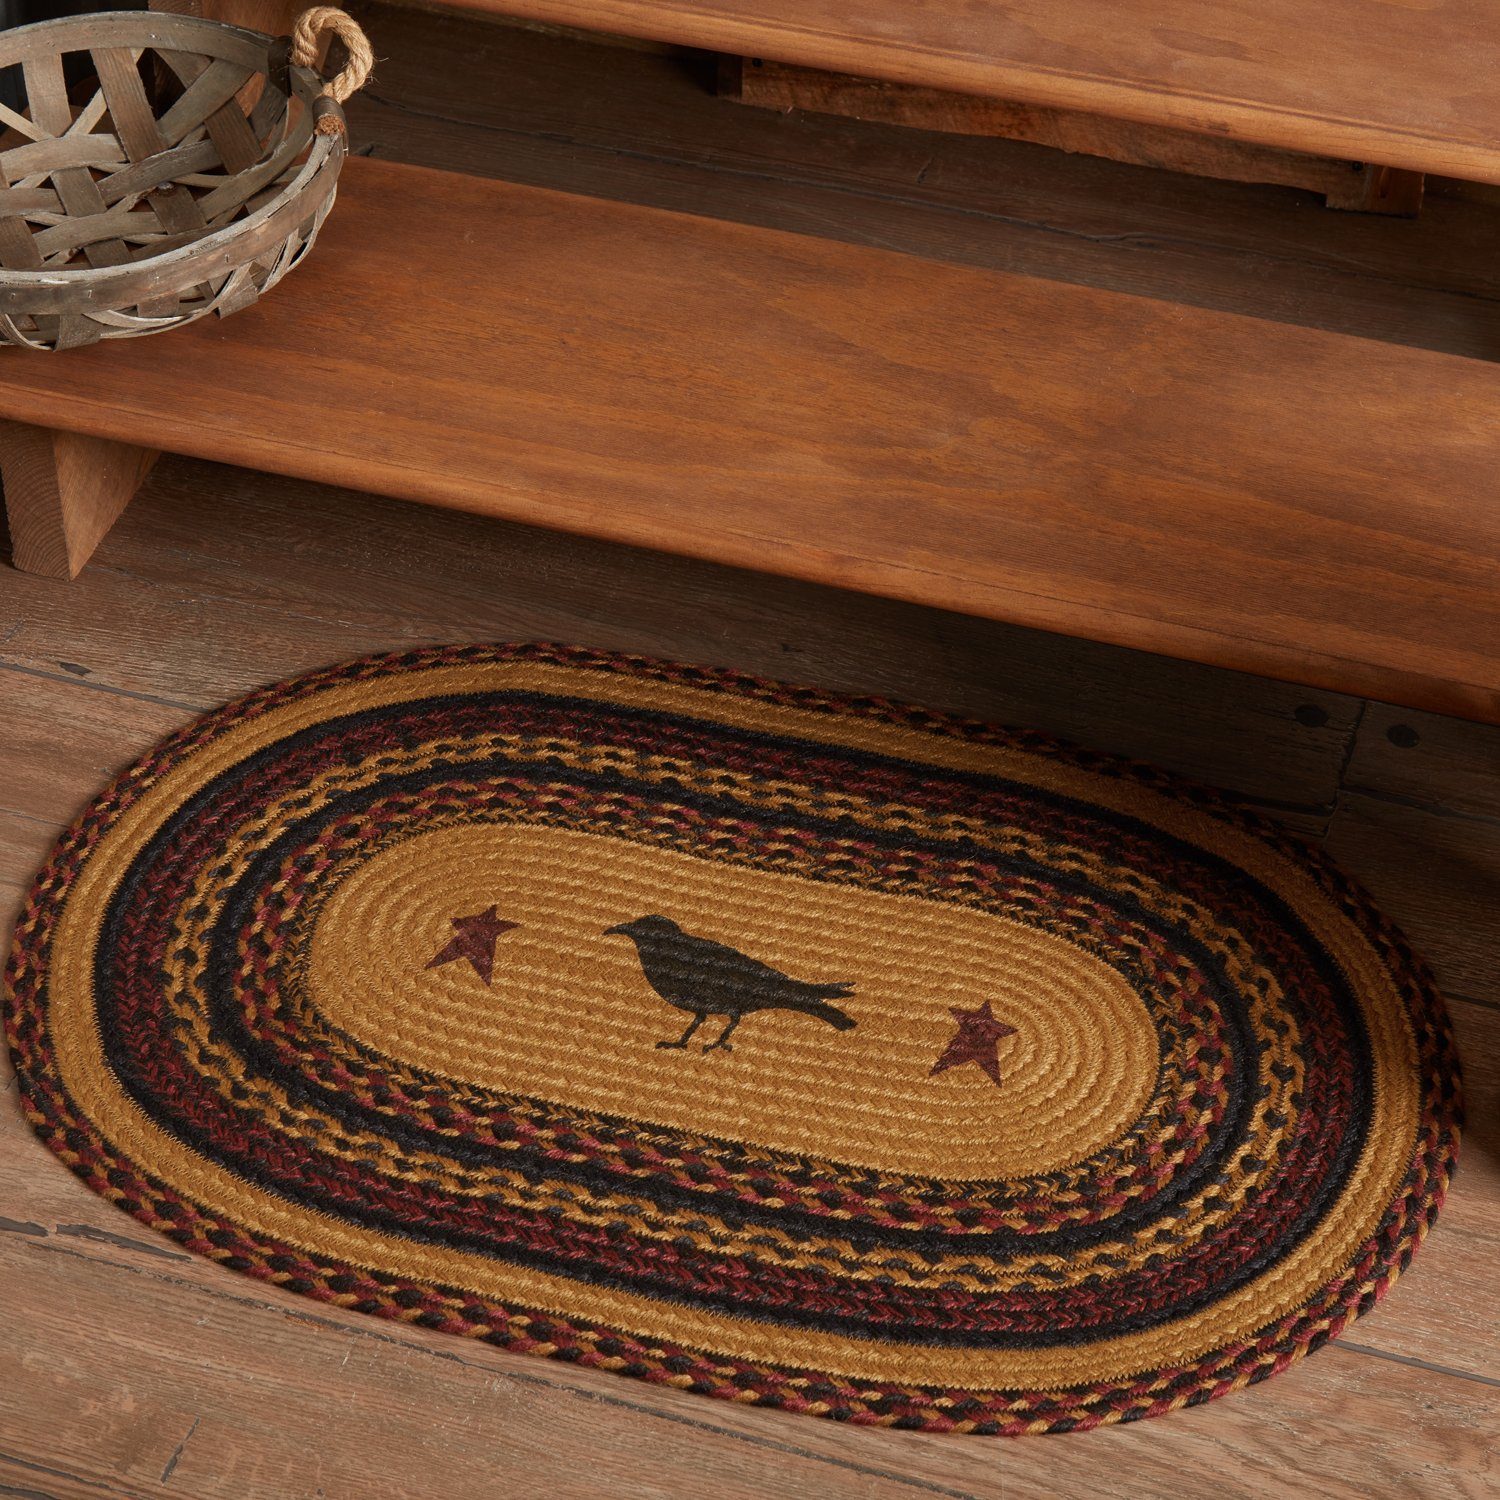 Heritage Farms crow oval braided rug 20x30